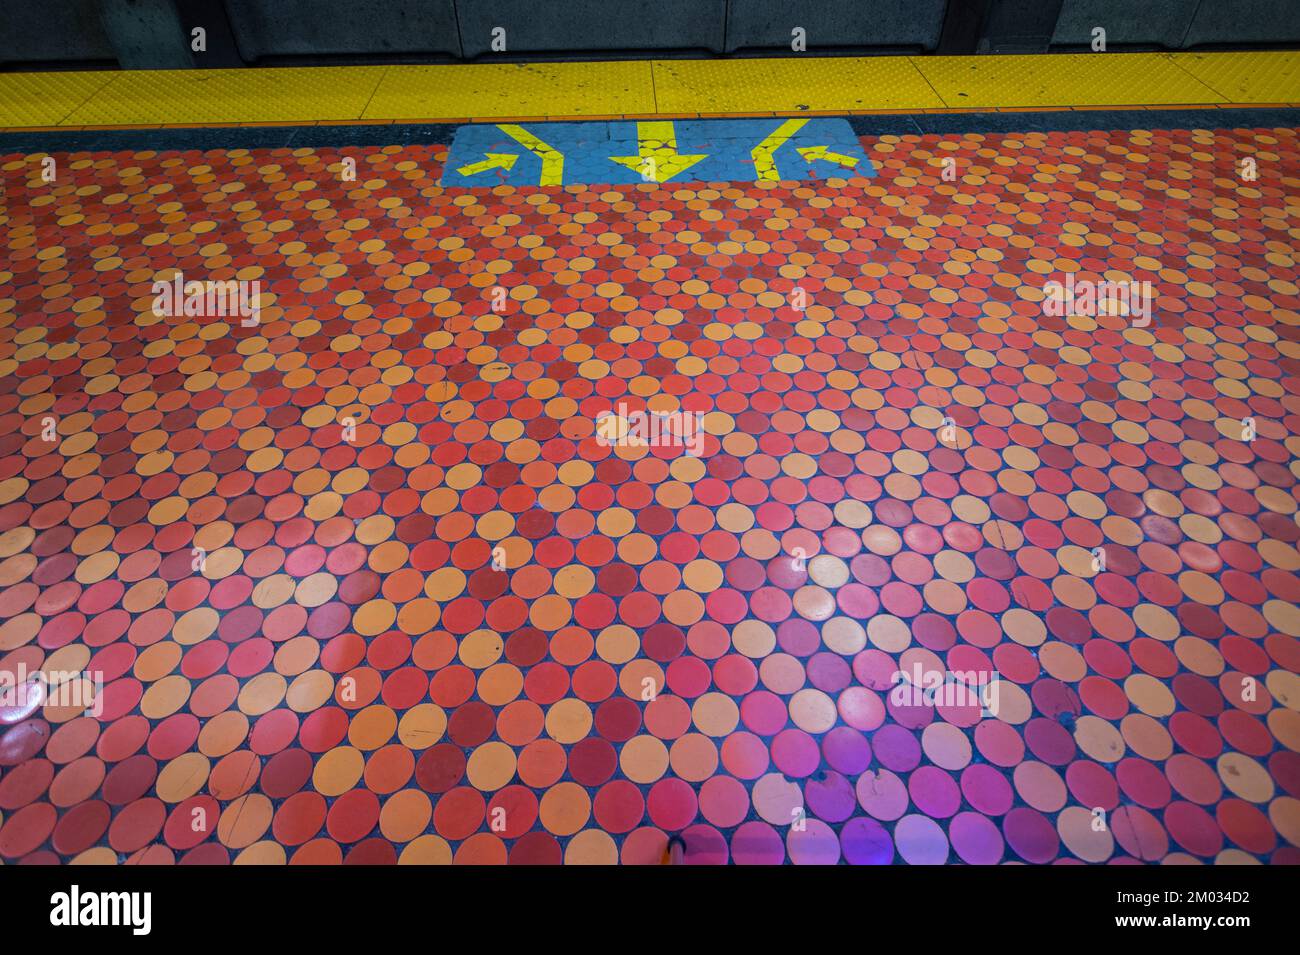 Polka dot floor at Villa-Maria Metro Station in Montreal, Quebec, Canada Stock Photo